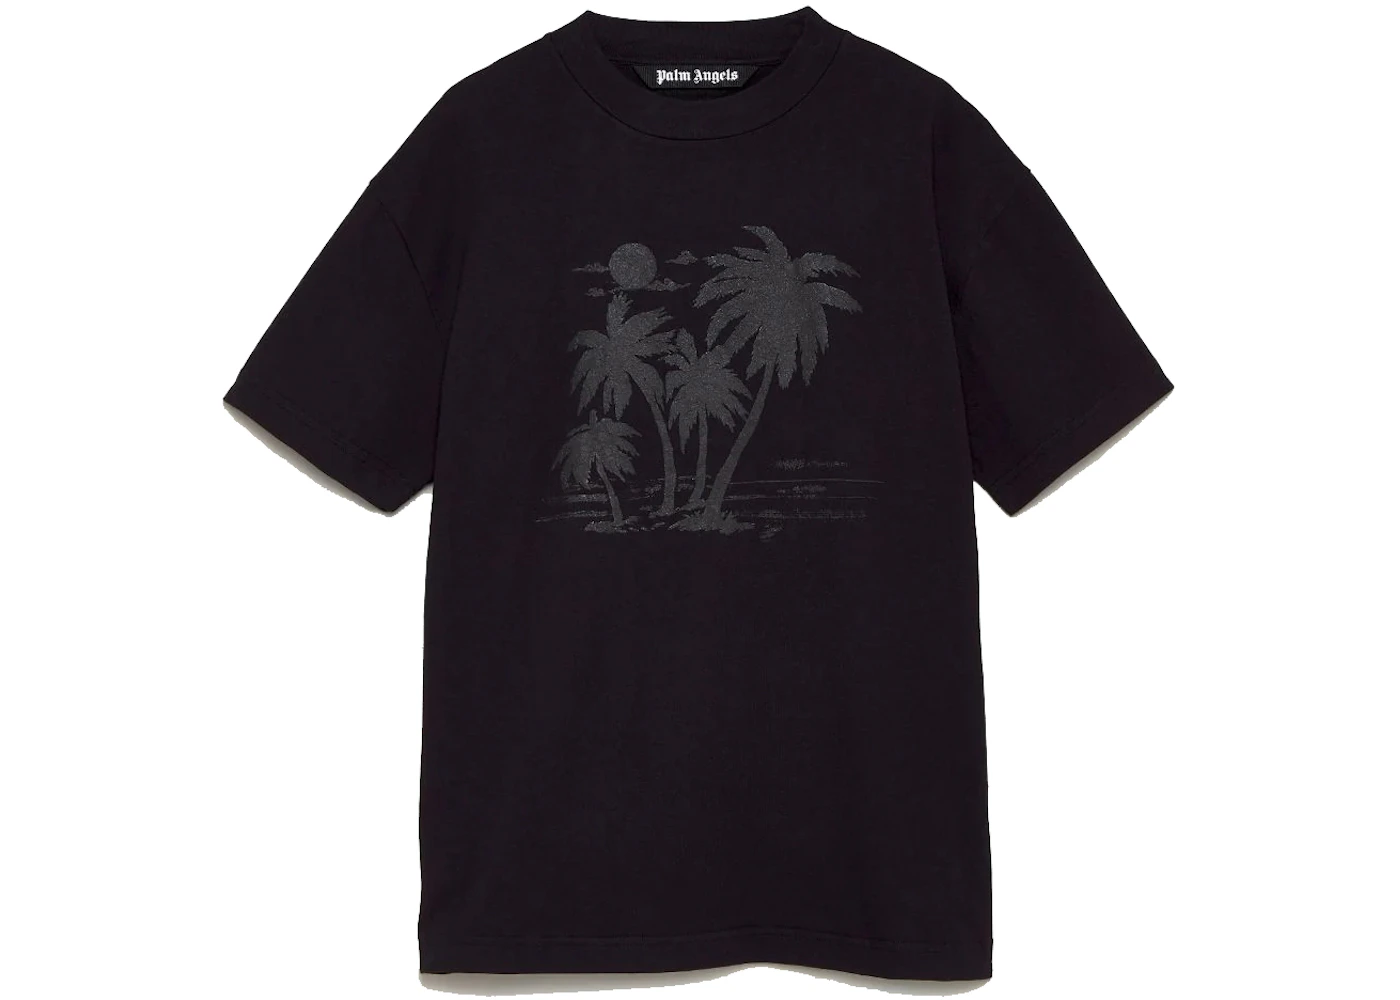 Palm Angels x Team Wang Palm Trees T-shirt Black Men's - SS21 - US